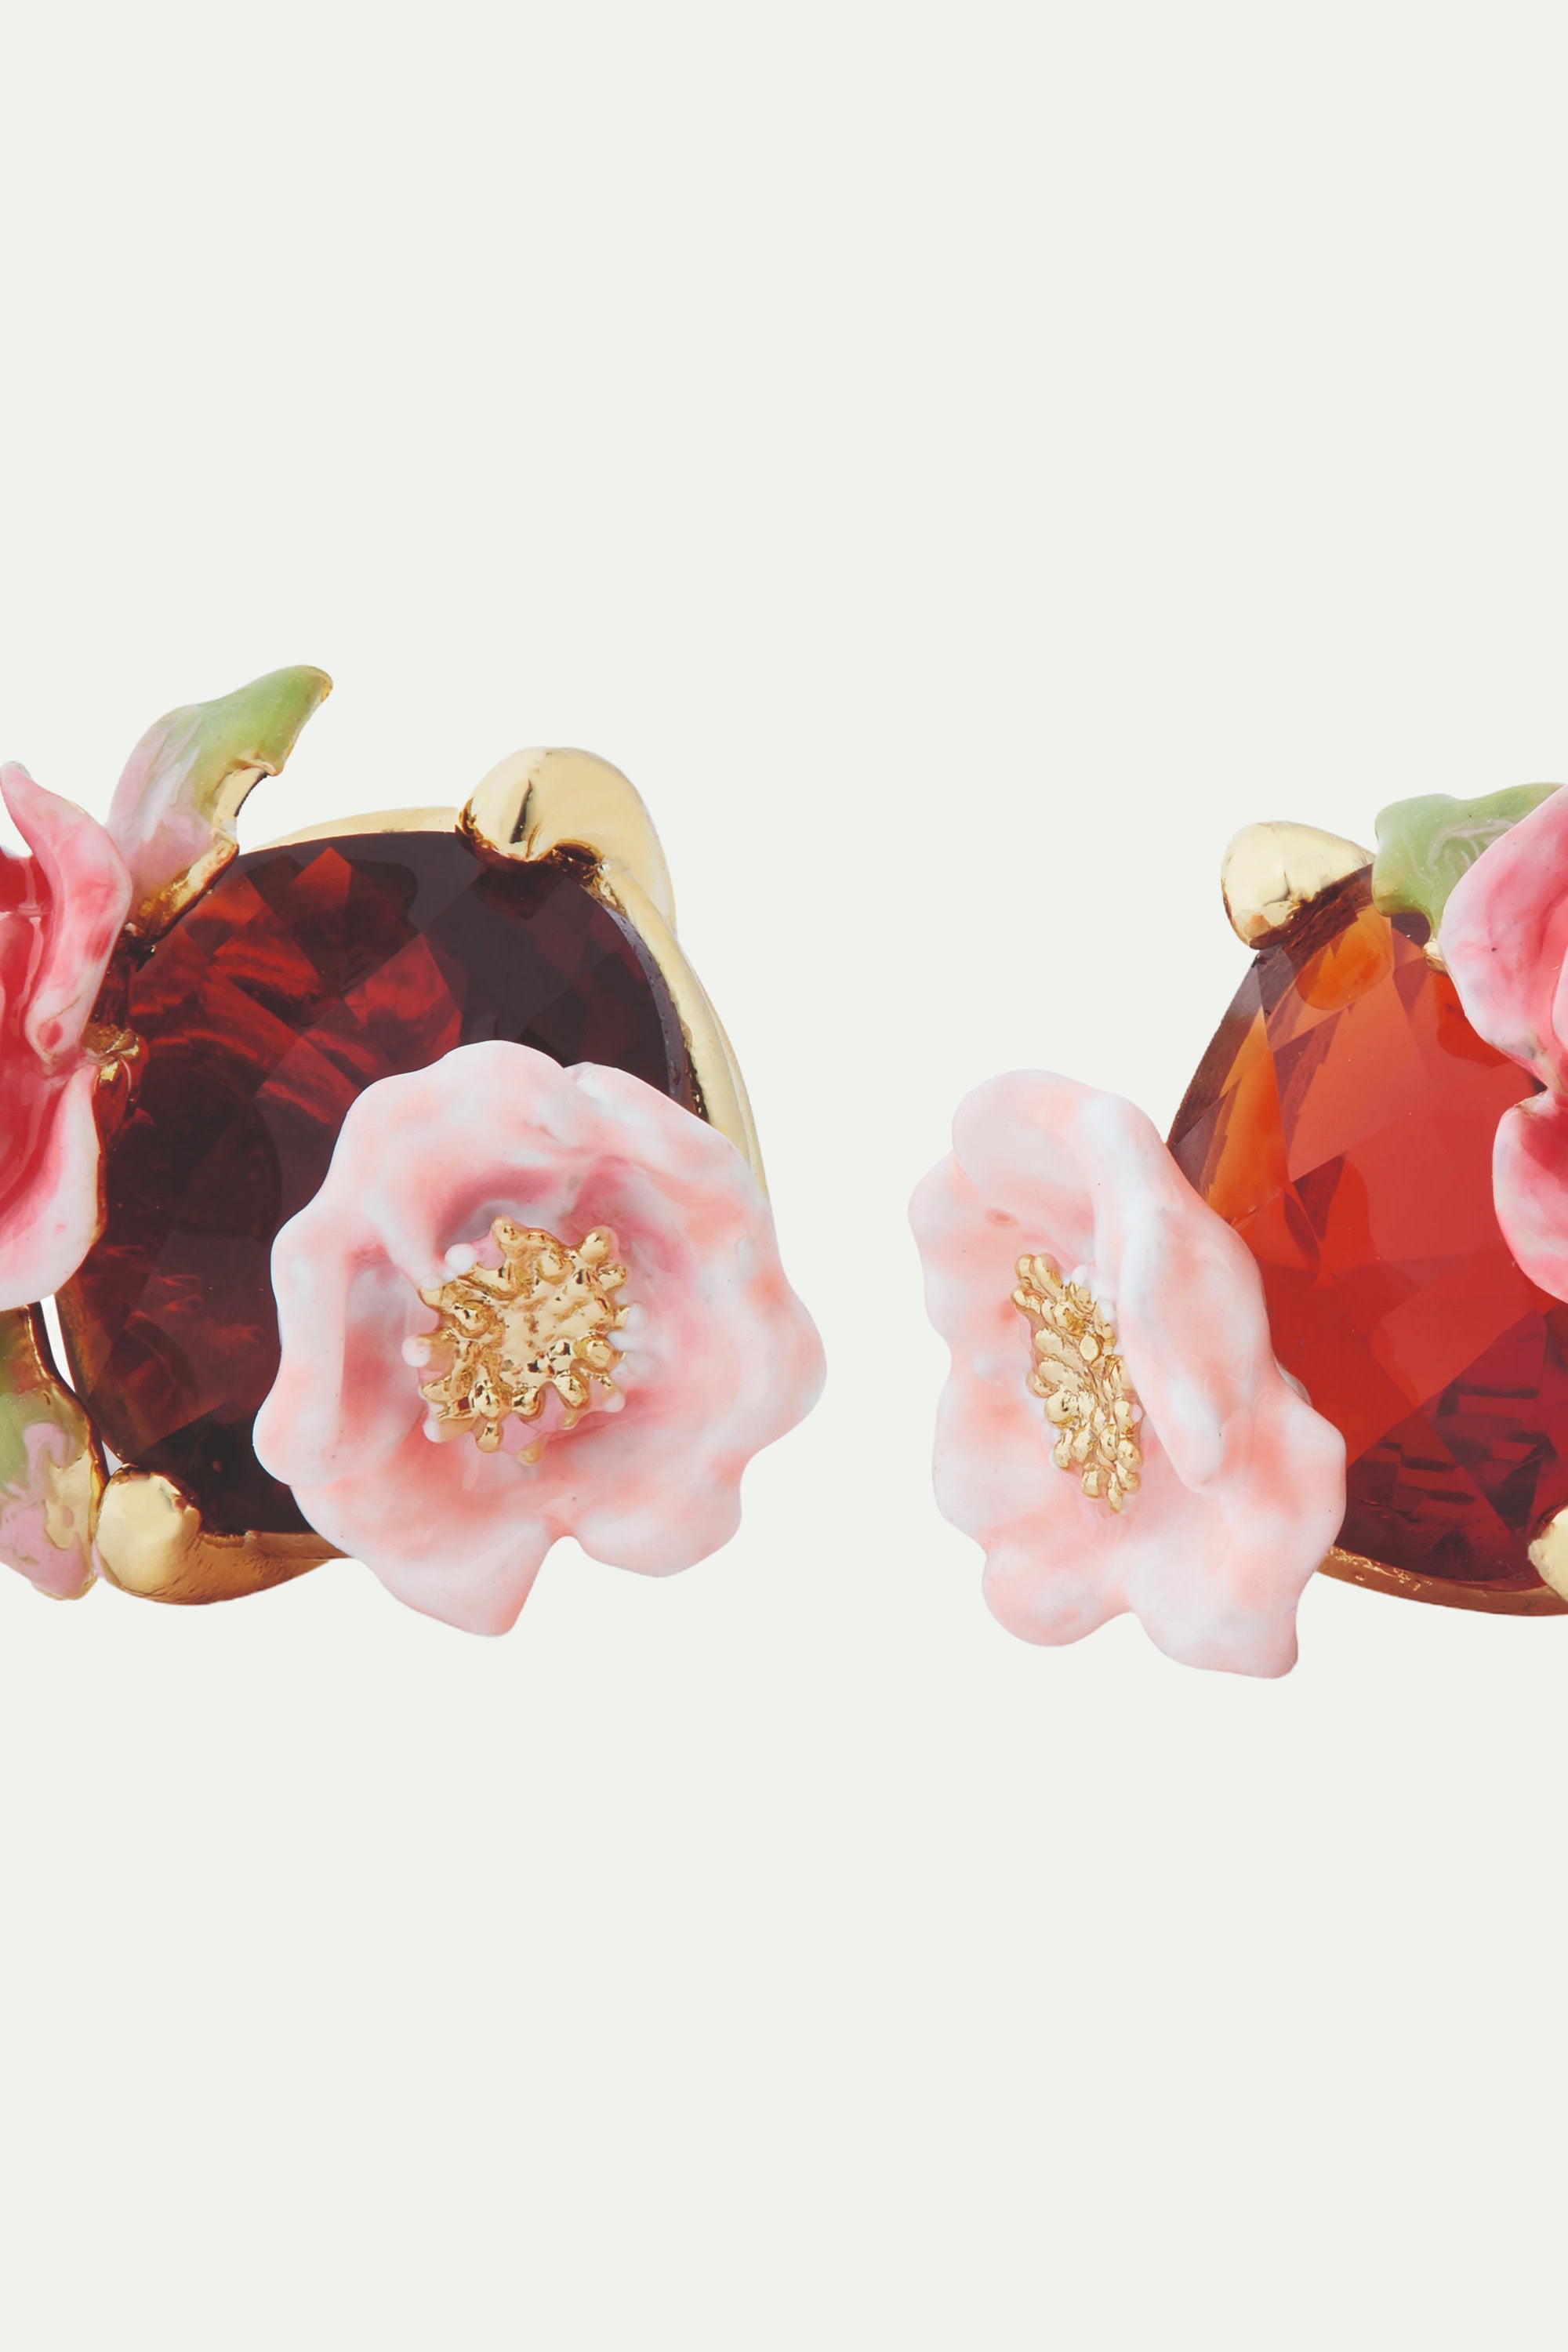 Wild rose and garnet red stone sleeper earrings